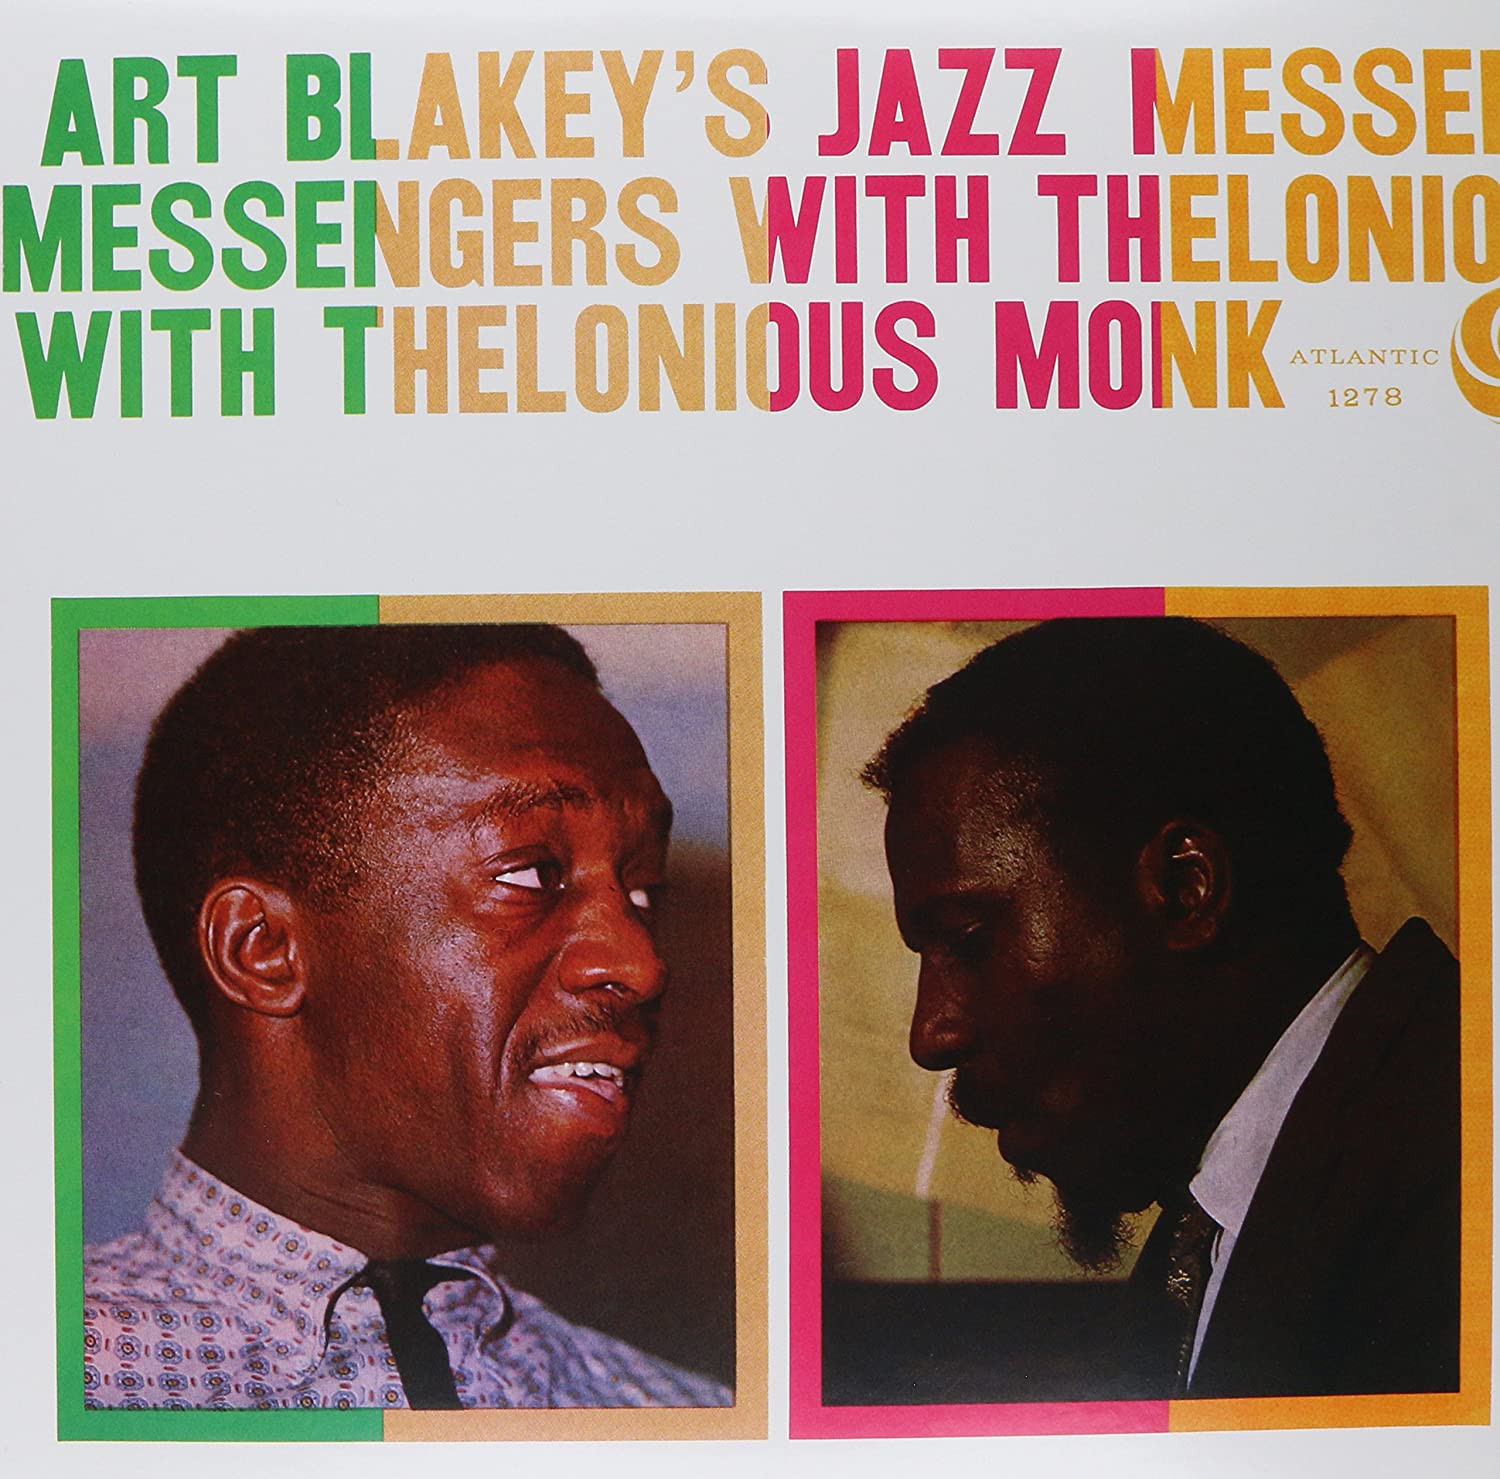 Art Blakey - Jazz Messengers With Thelonious Monk (65th Anniversary Deluxe Edition) (Rhino Atlantic)